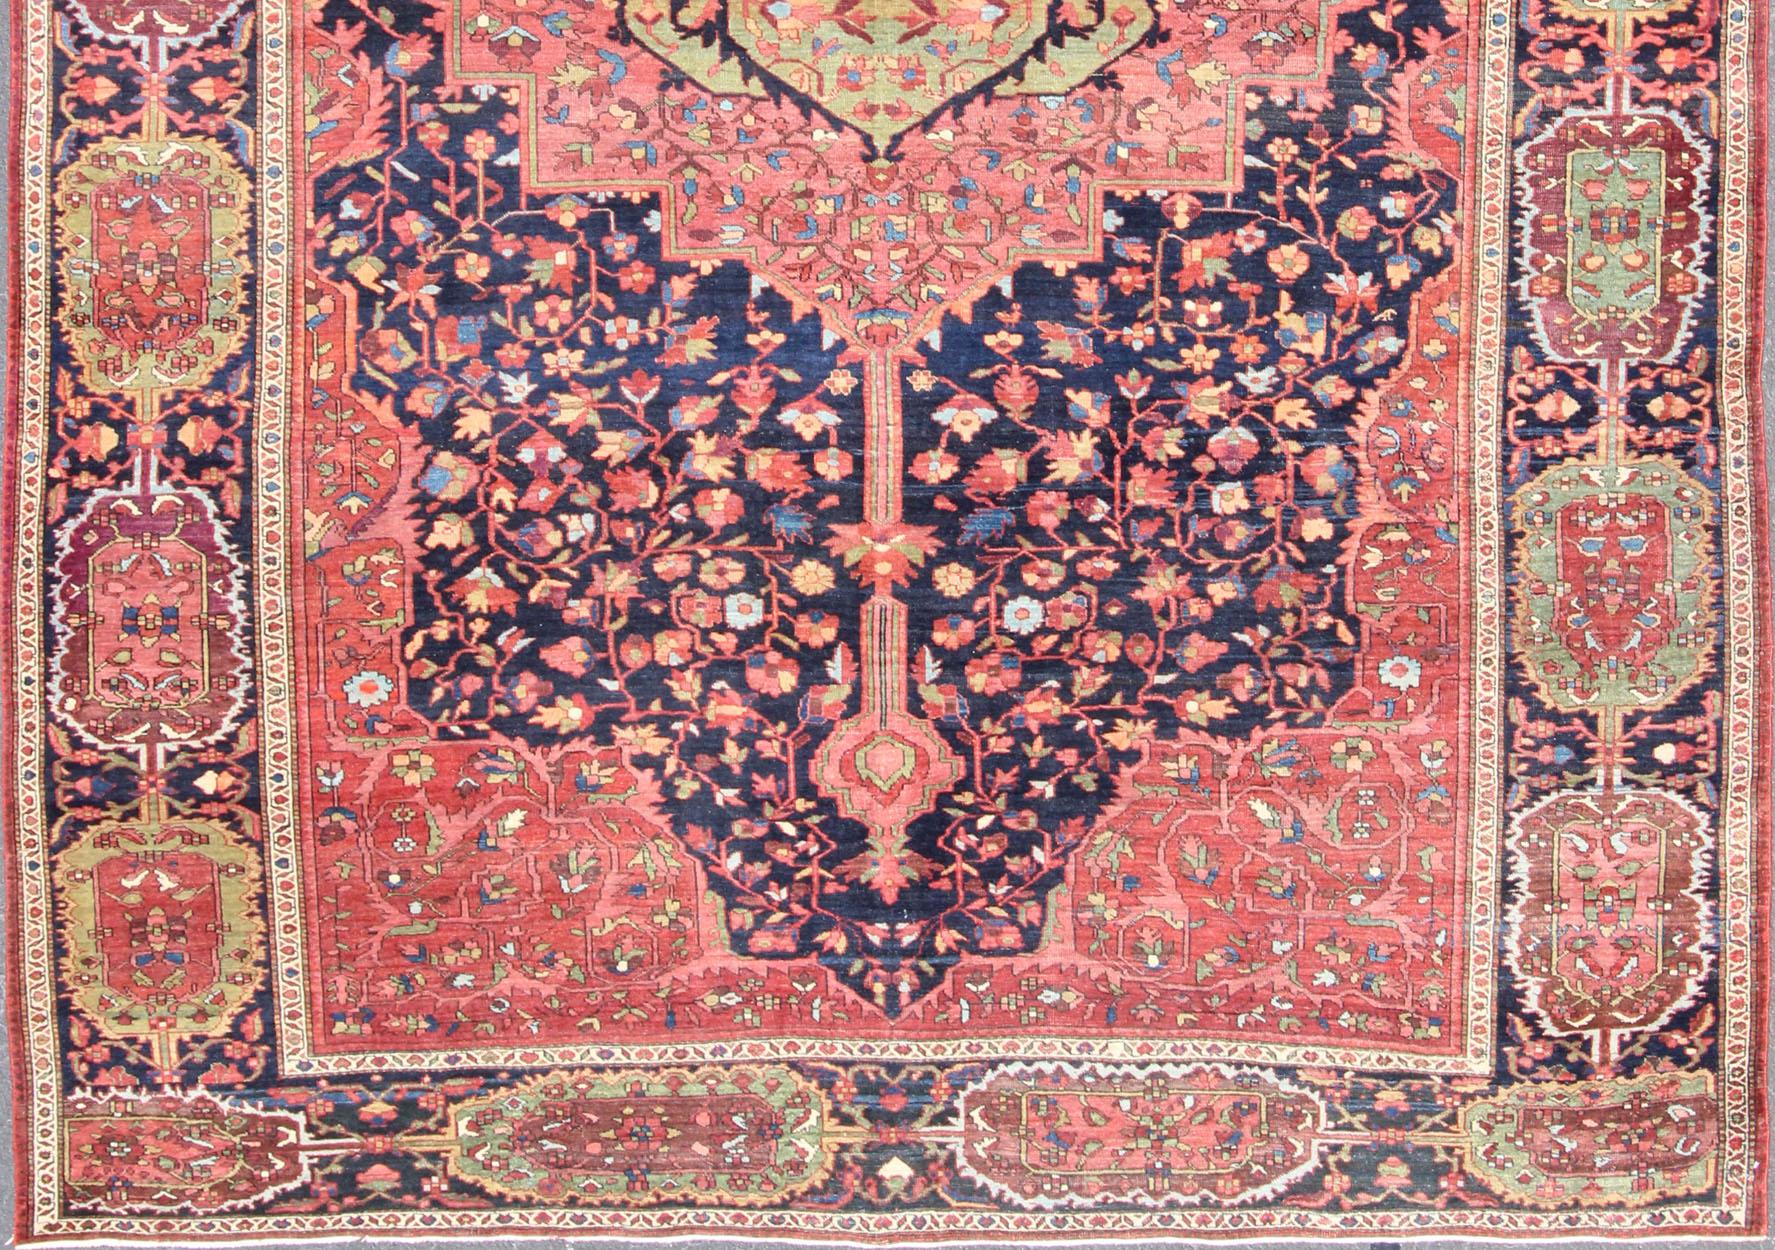 Antique Persian Feraghan Sarouk Rug. Keivan Woven Arts / rug /VR-3585, country of origin / type: Iran / Antique Persian Feraghan Sarouk , circa 1890.

Measures: 9'2 x 13' 
                                                             
This